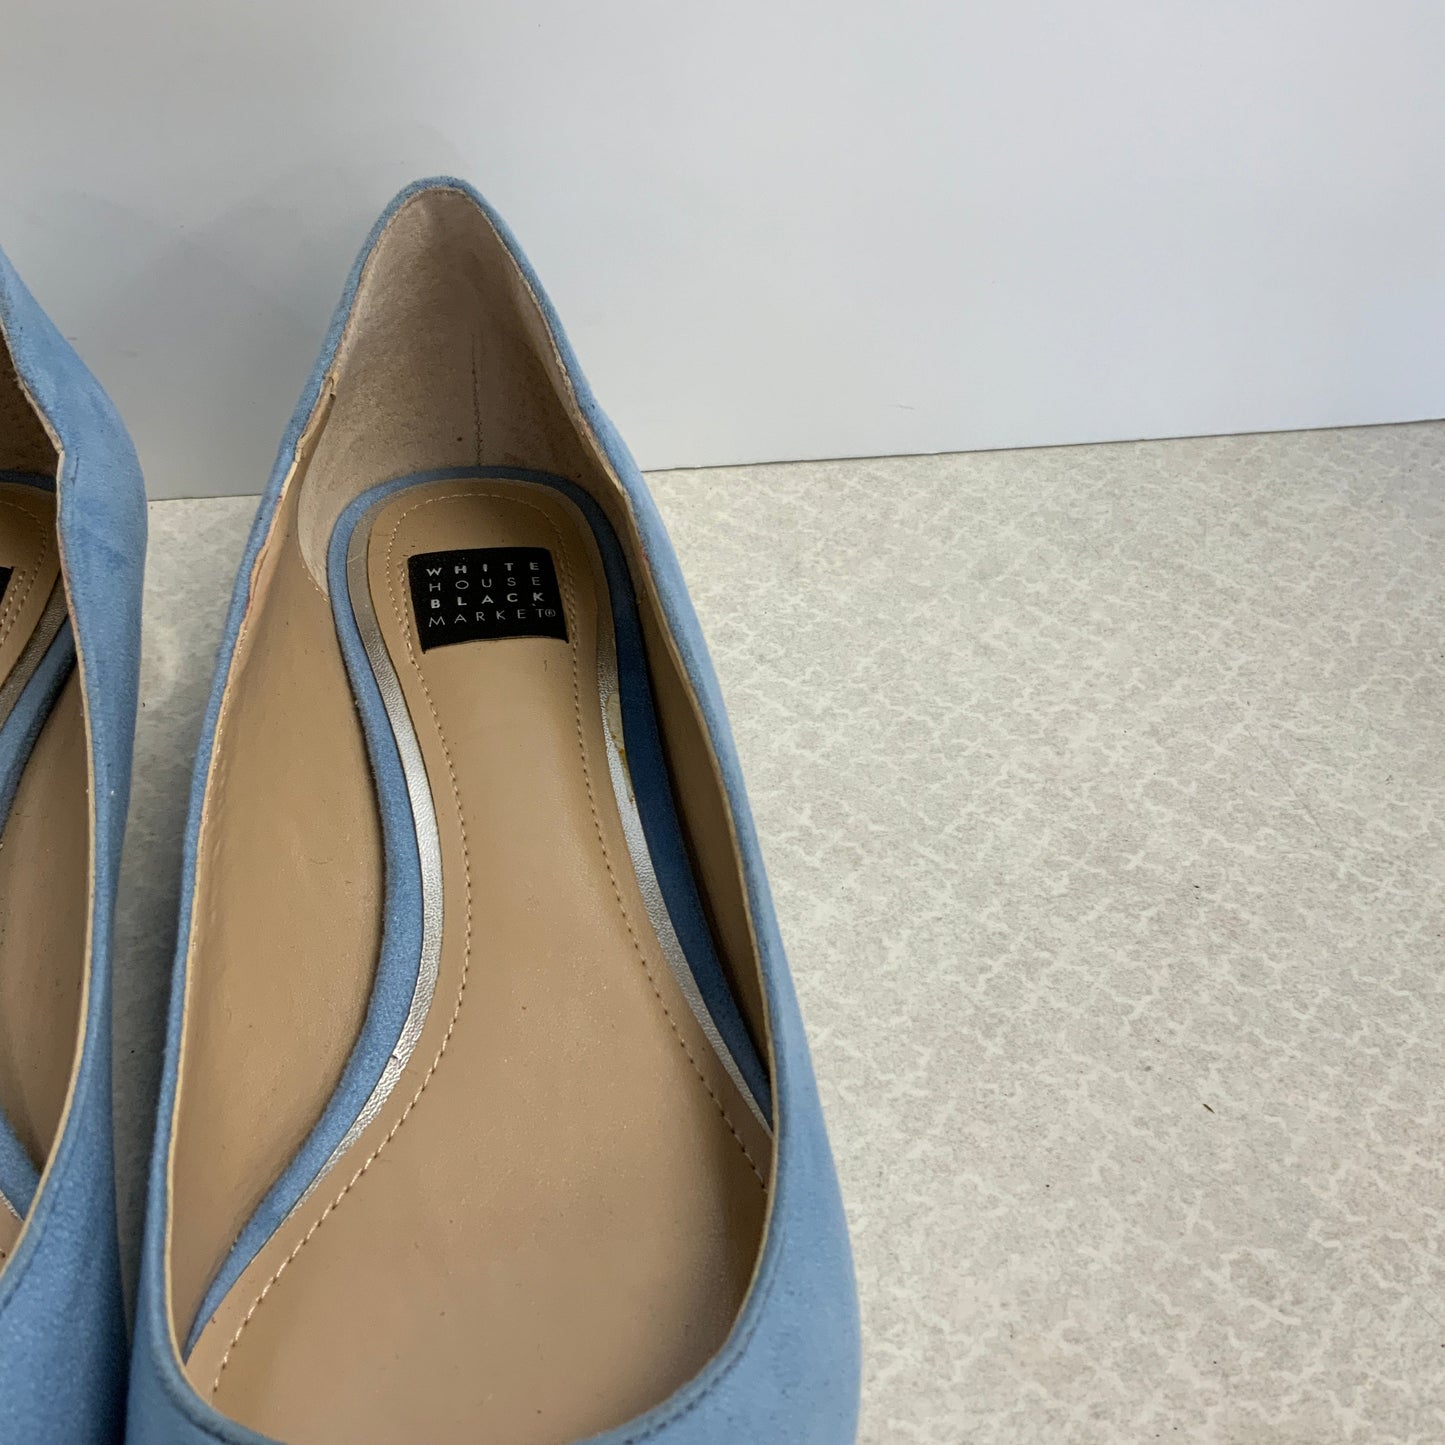 Blue Shoes Flats White House Black Market, Size 6.5